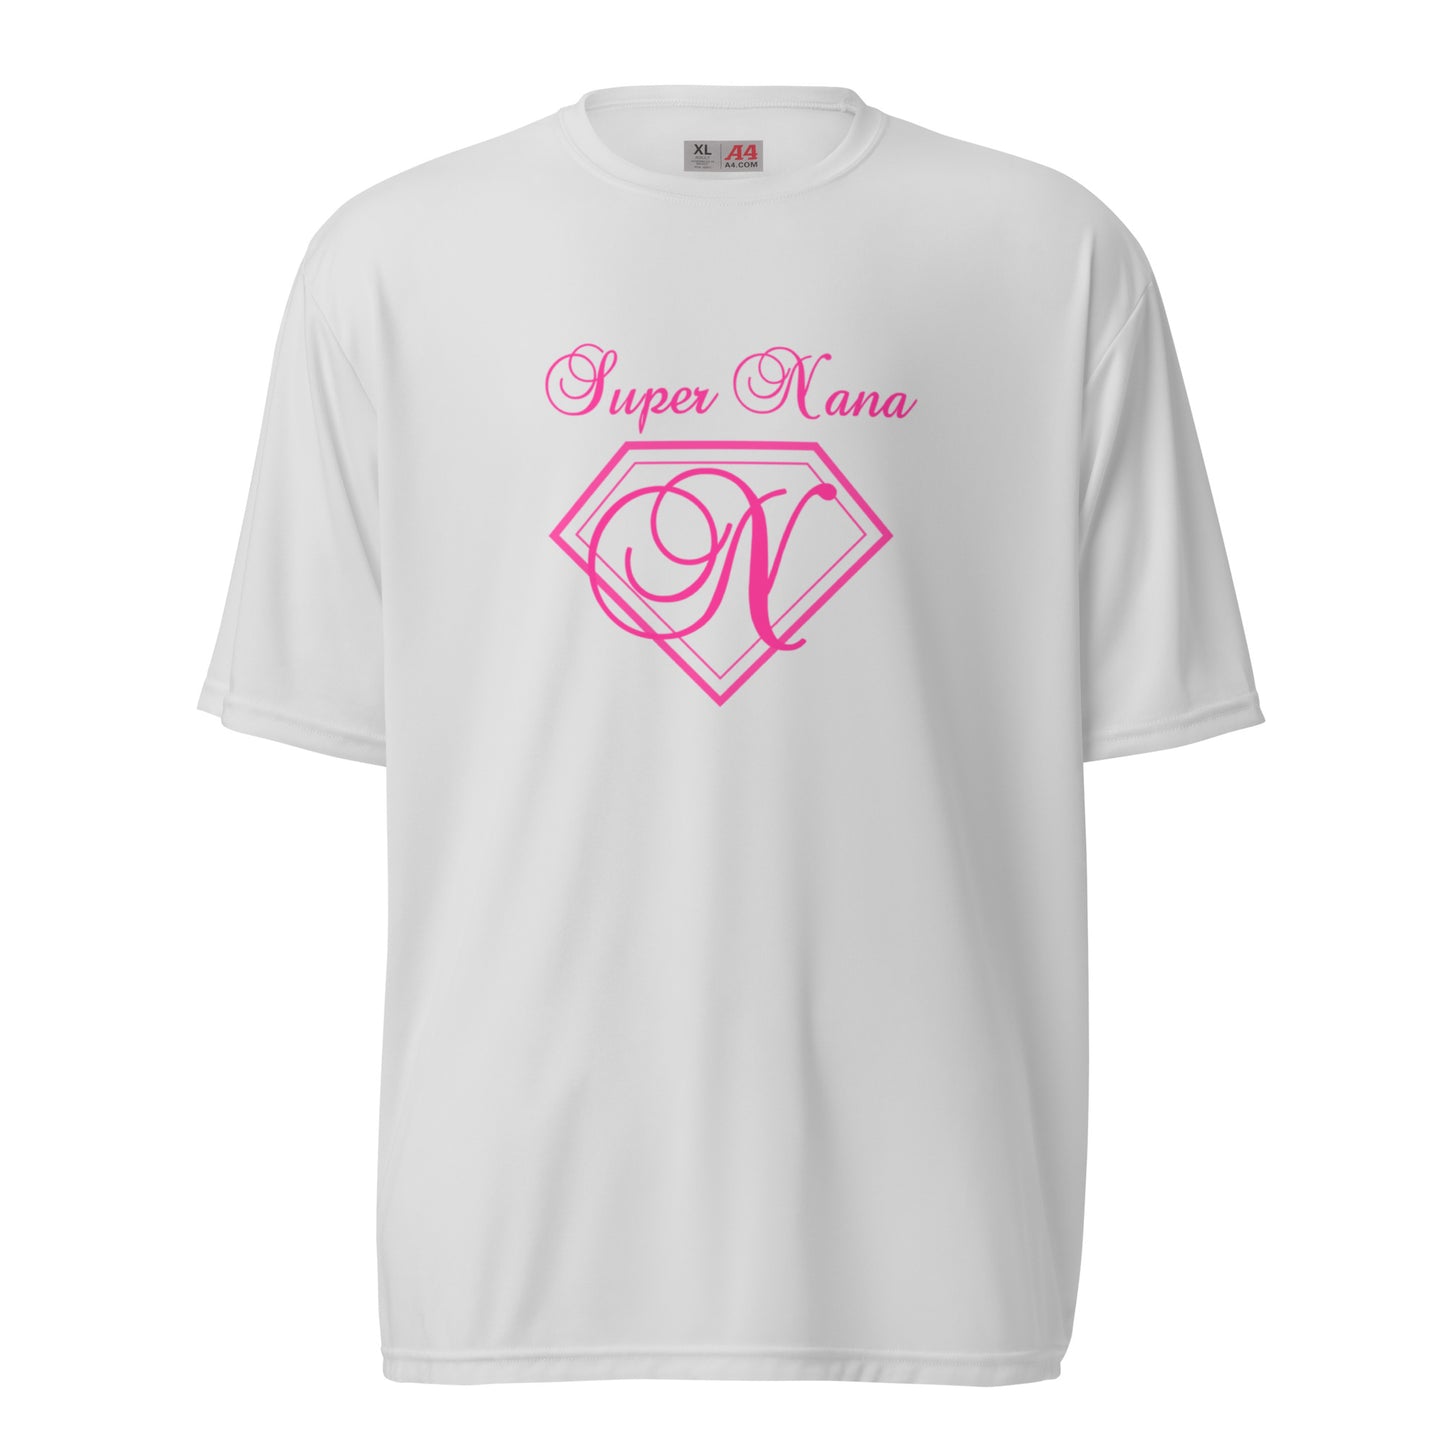 Super Nana unisex performance crew neck t-shirt - Pink Print